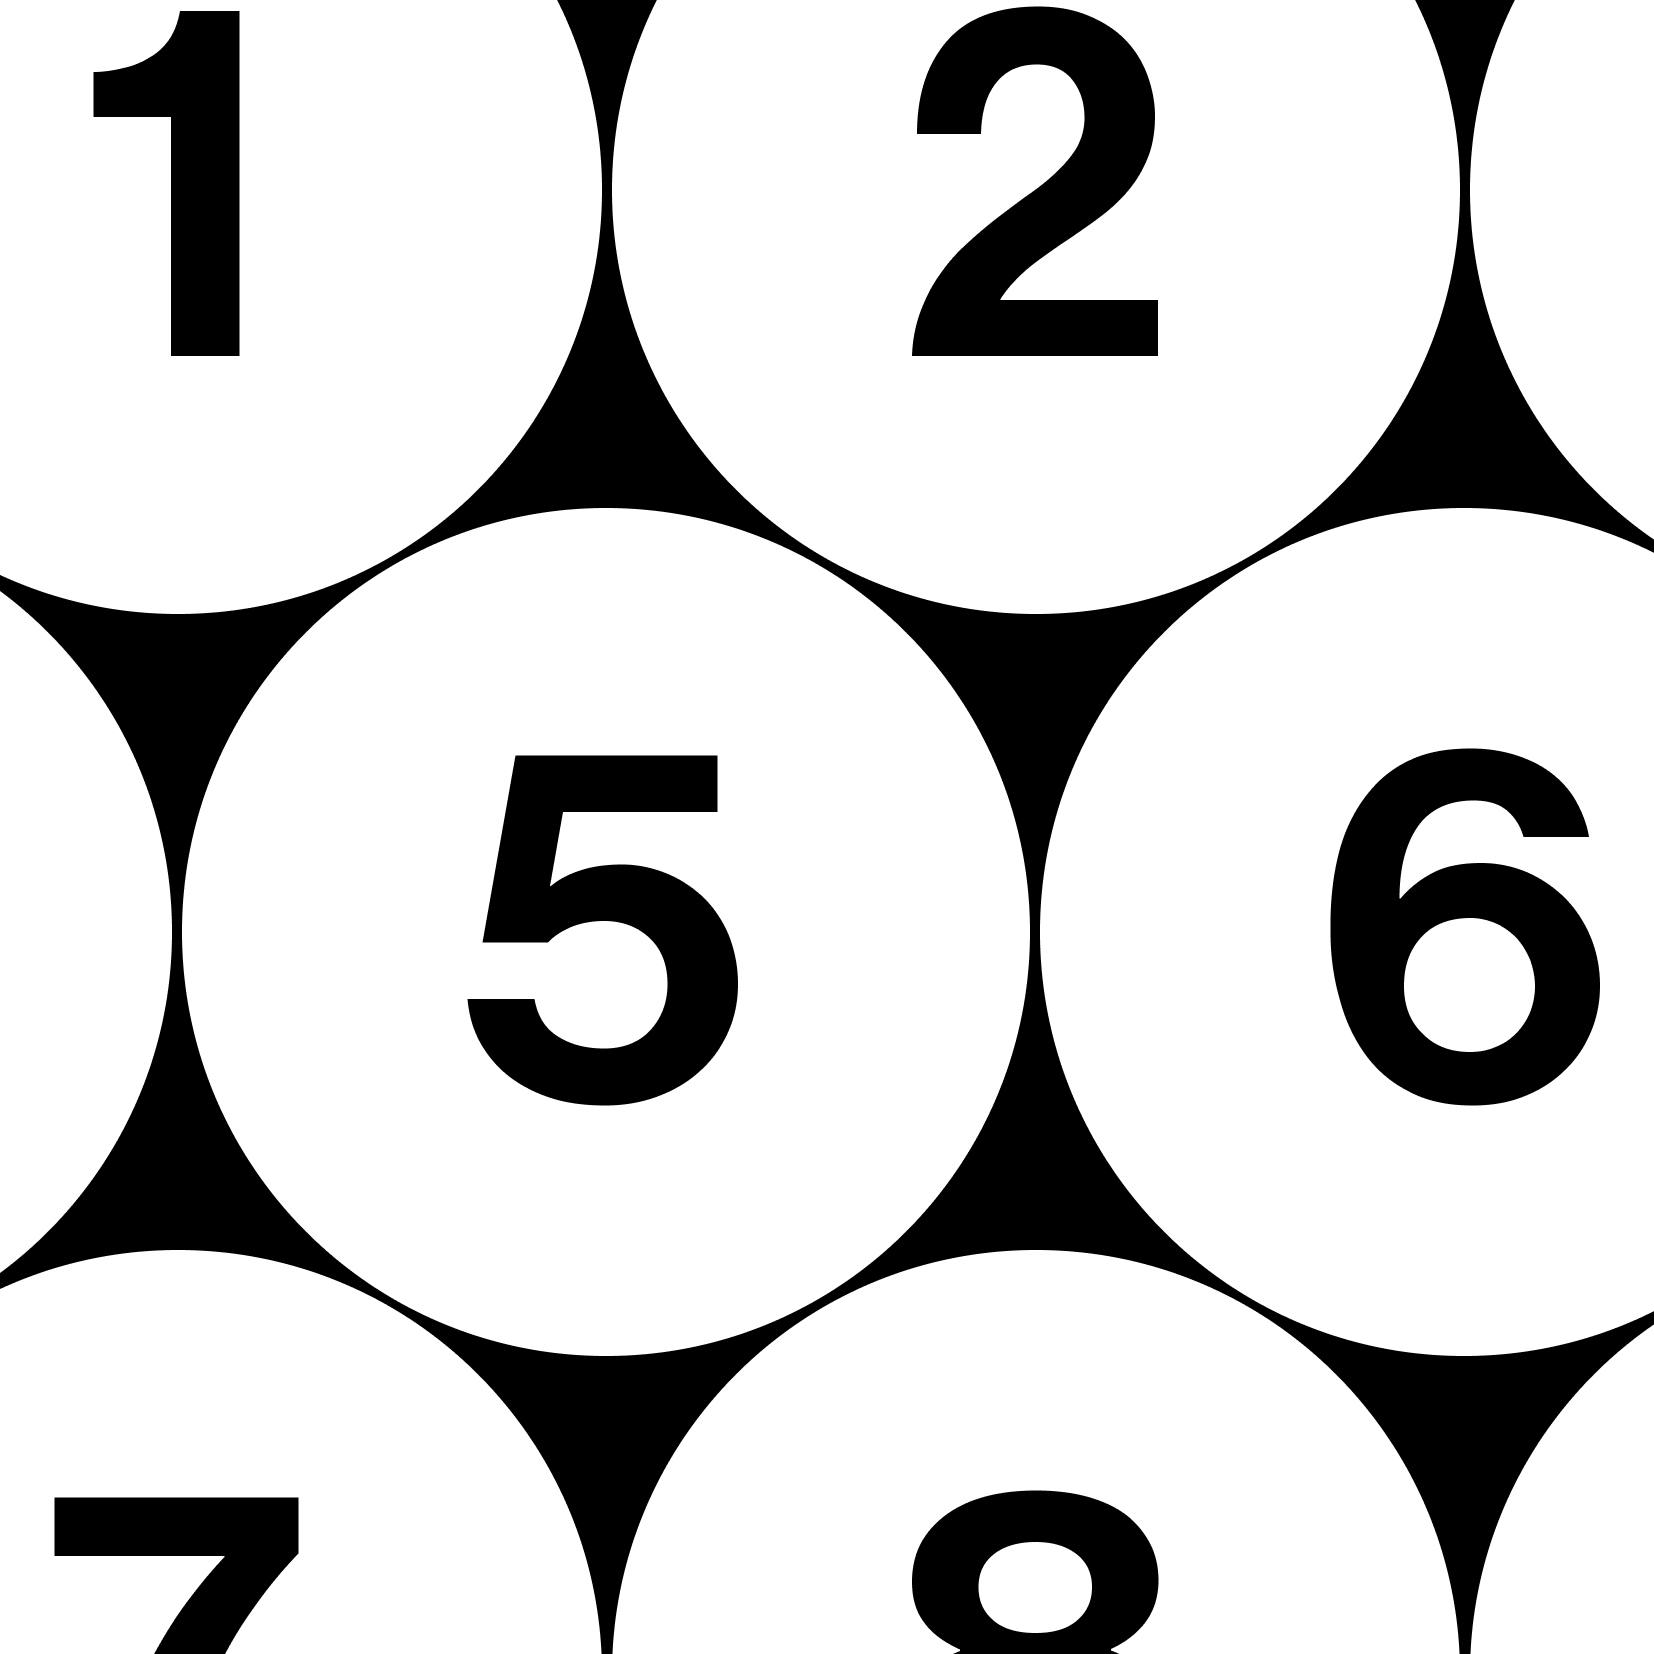 Numeric keypads arranged in an unusual pattern